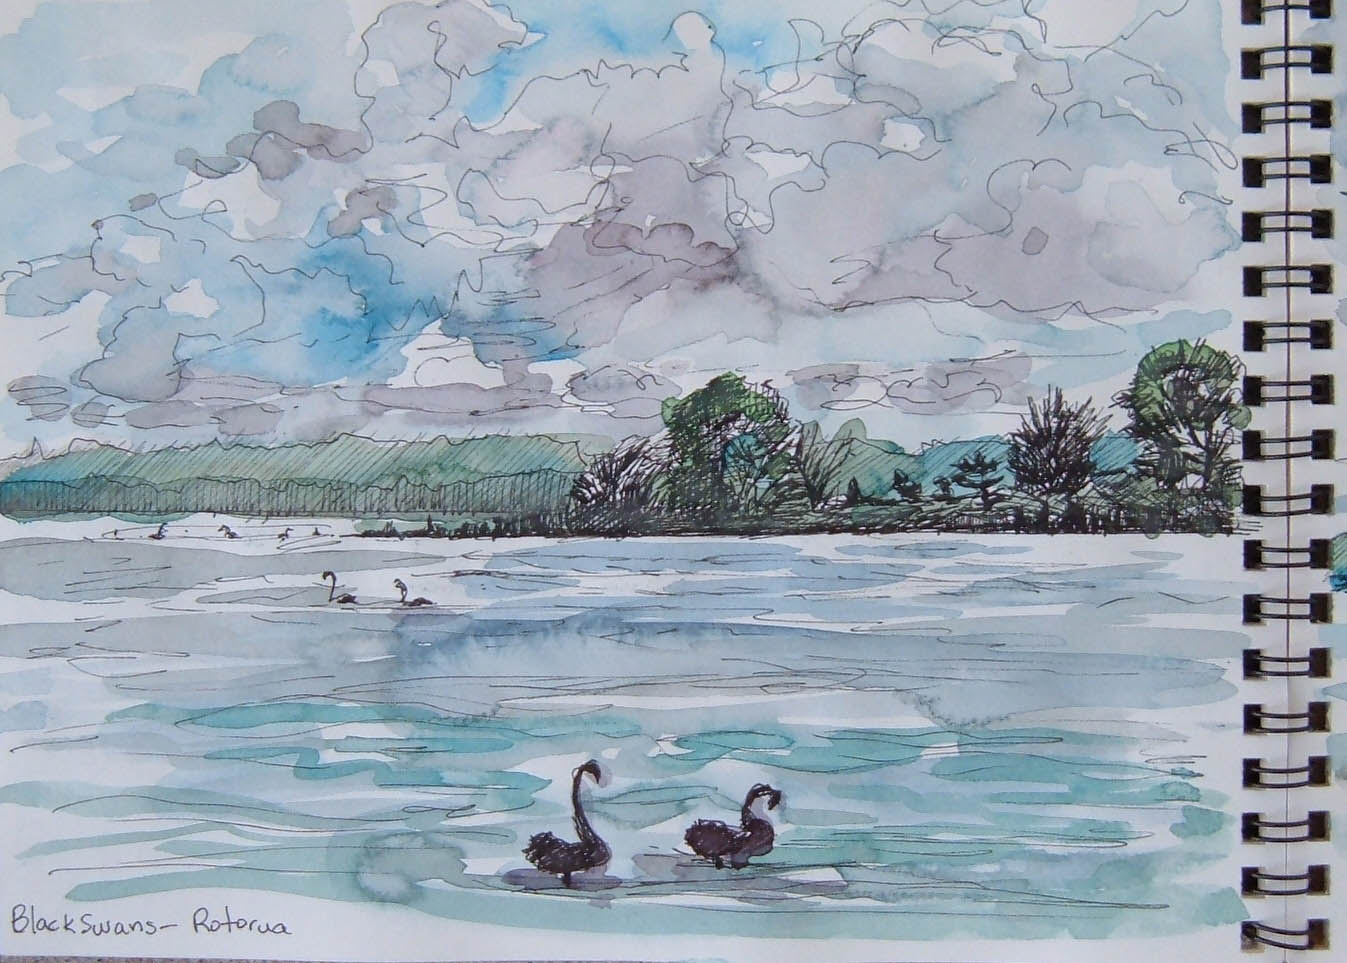 [Black+Swans,+Rotorua,+NZ+March+2007.jpg]